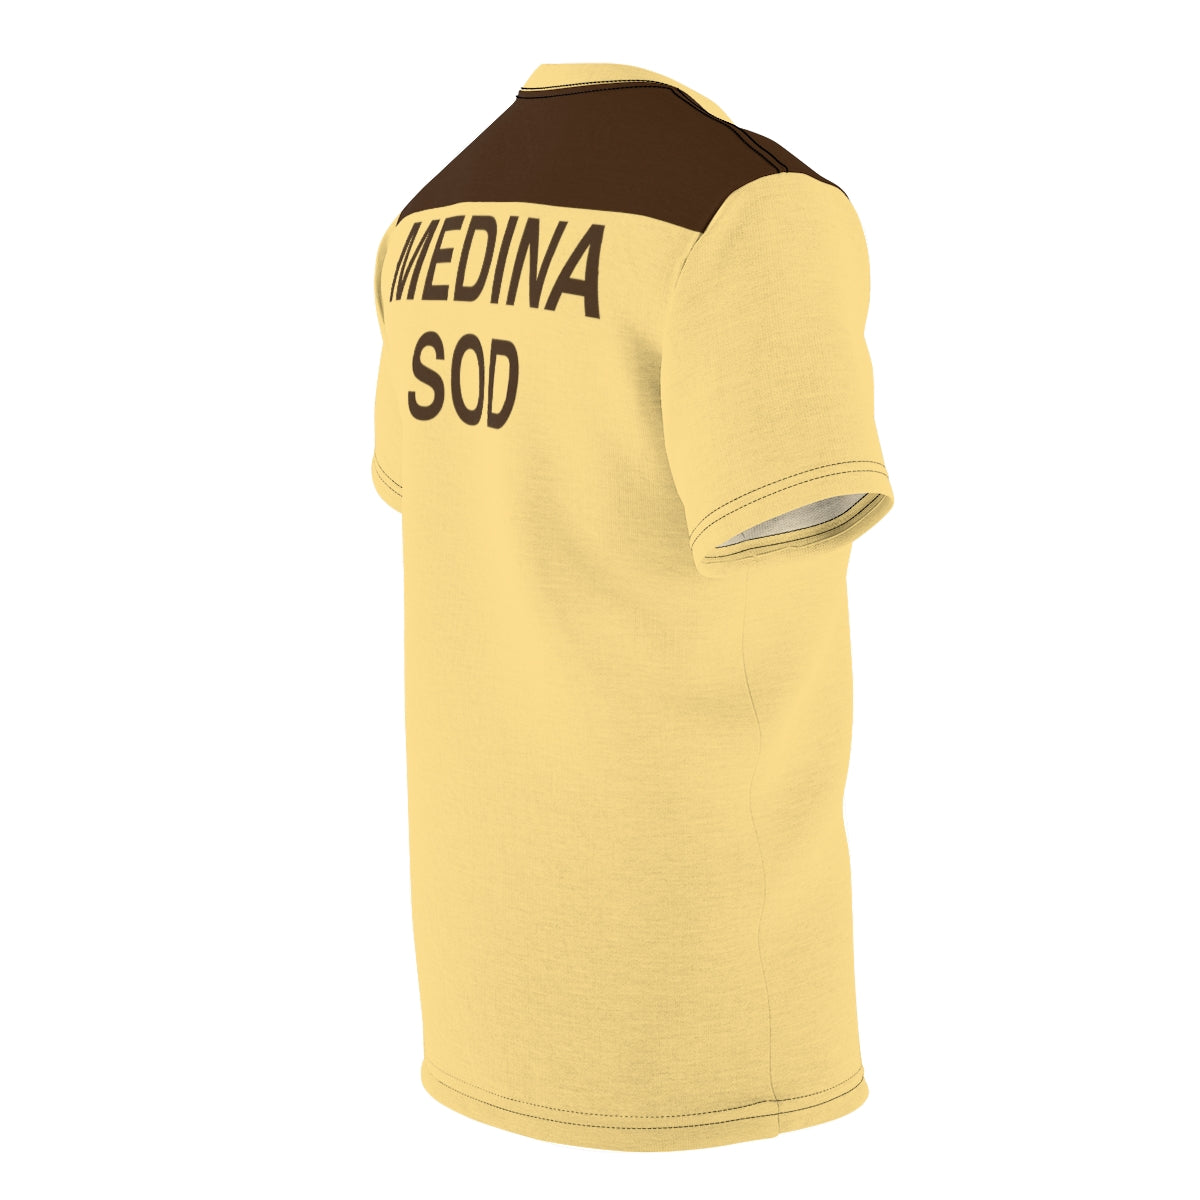 The Dude's Bowling shirt - Medina Sod | Lebowski t-shirt